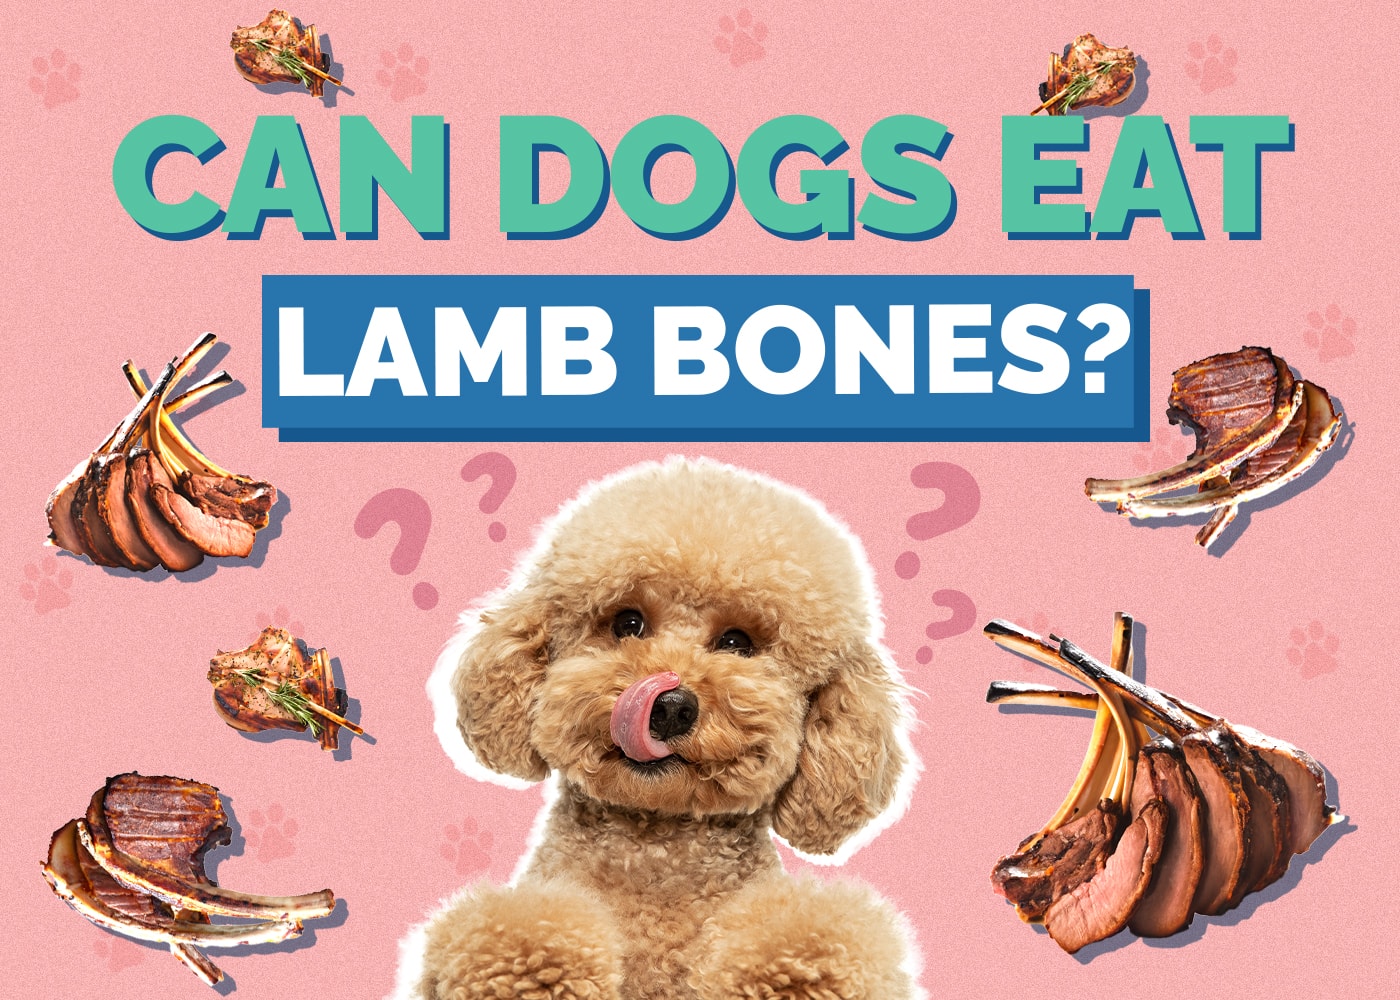 Can Dogs Eat Lamb bones